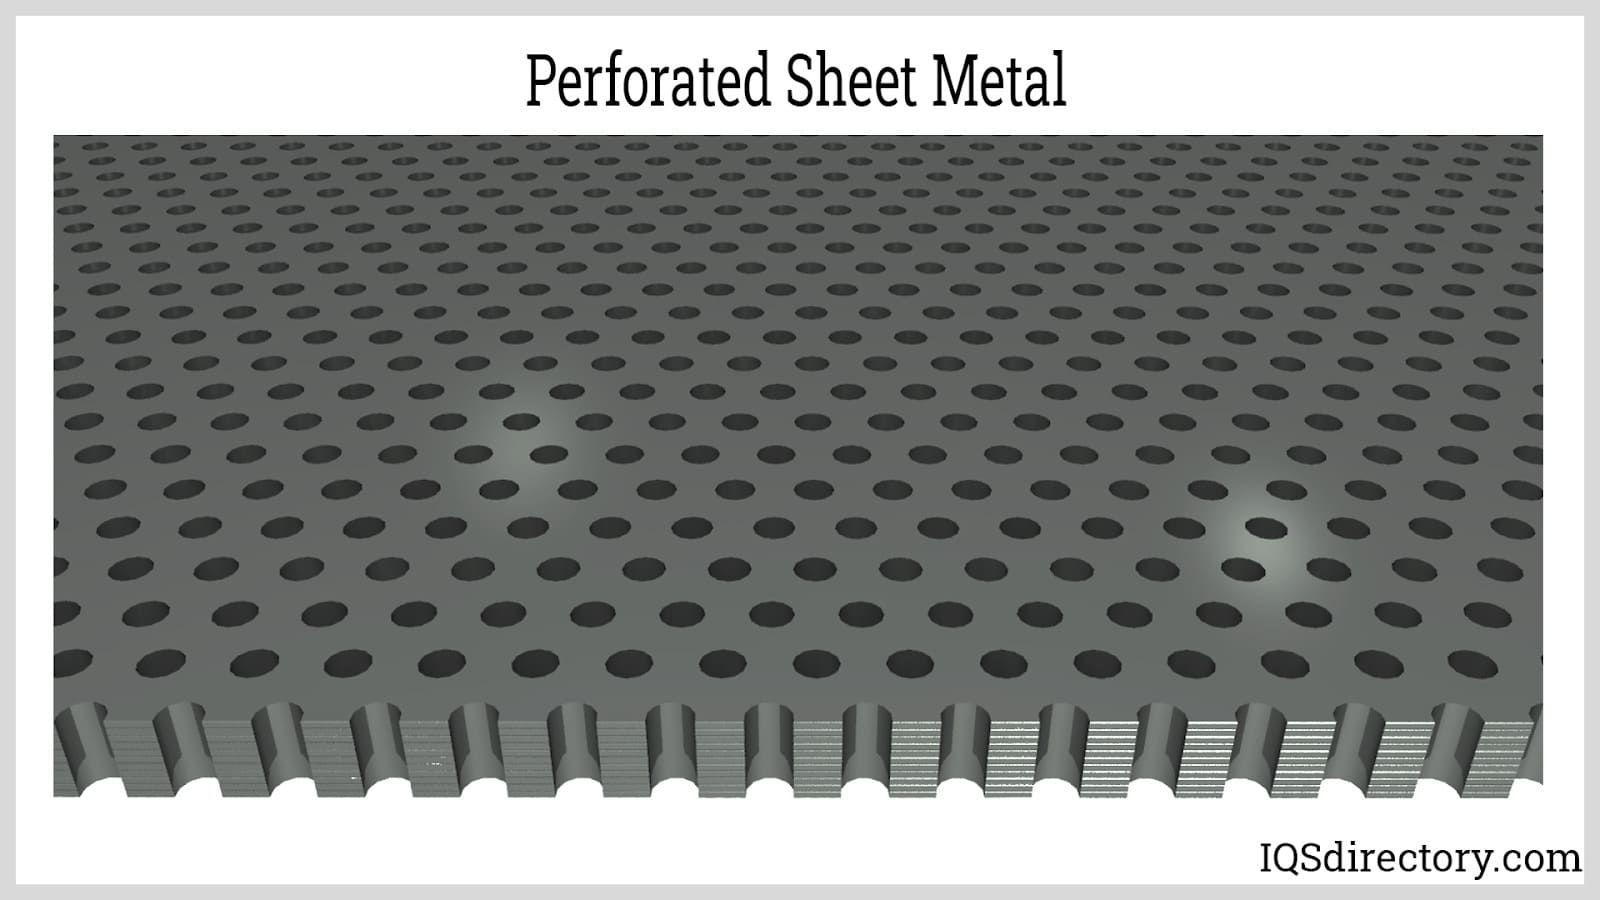 Perforated metal versus expanded metal - News